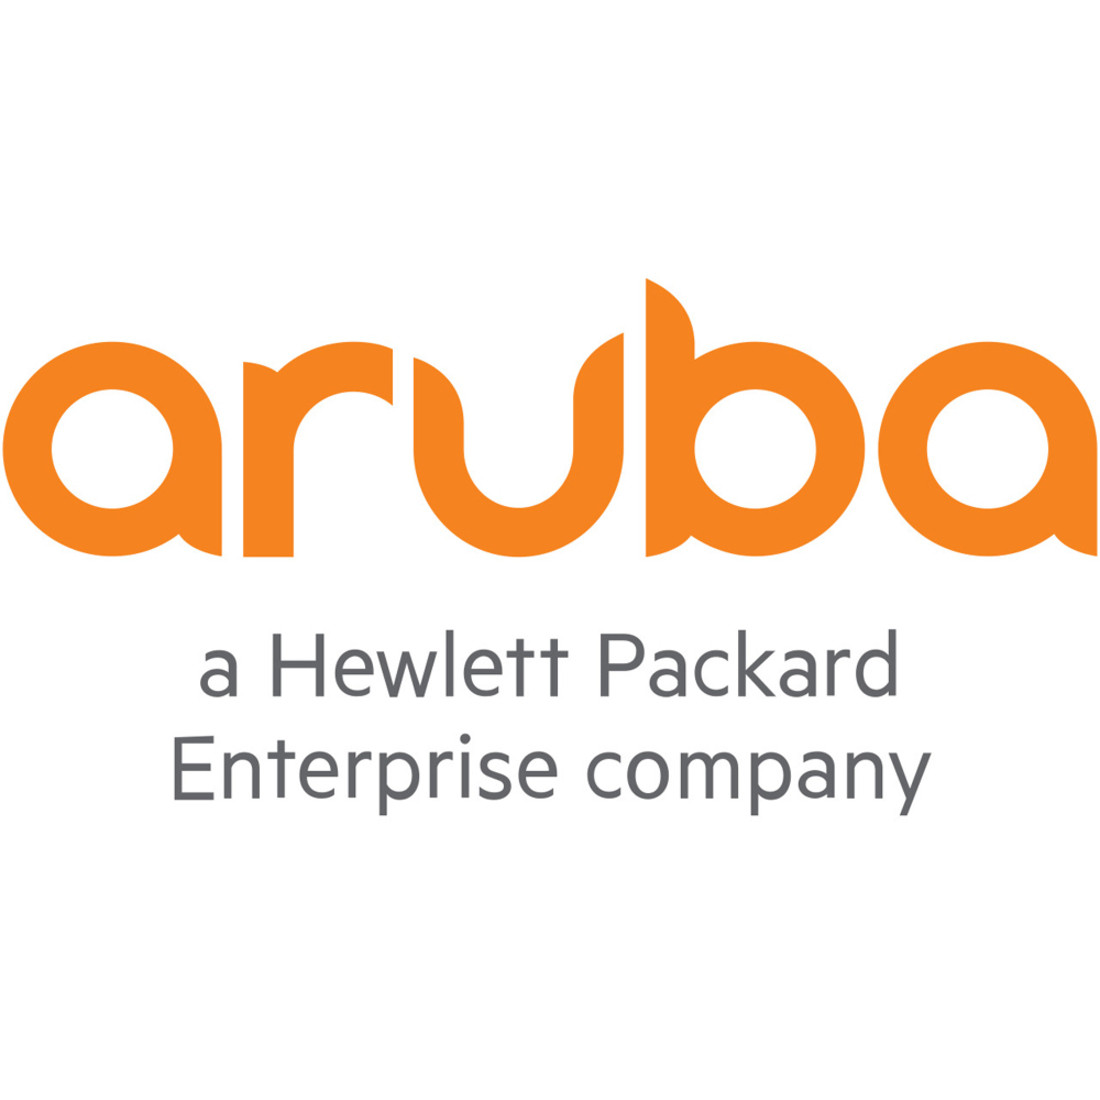 Aruba Foundation Care Hardware Only Extended WarrantyWarranty9 x 5 Next Business DayService DepotExchange HU5N2E